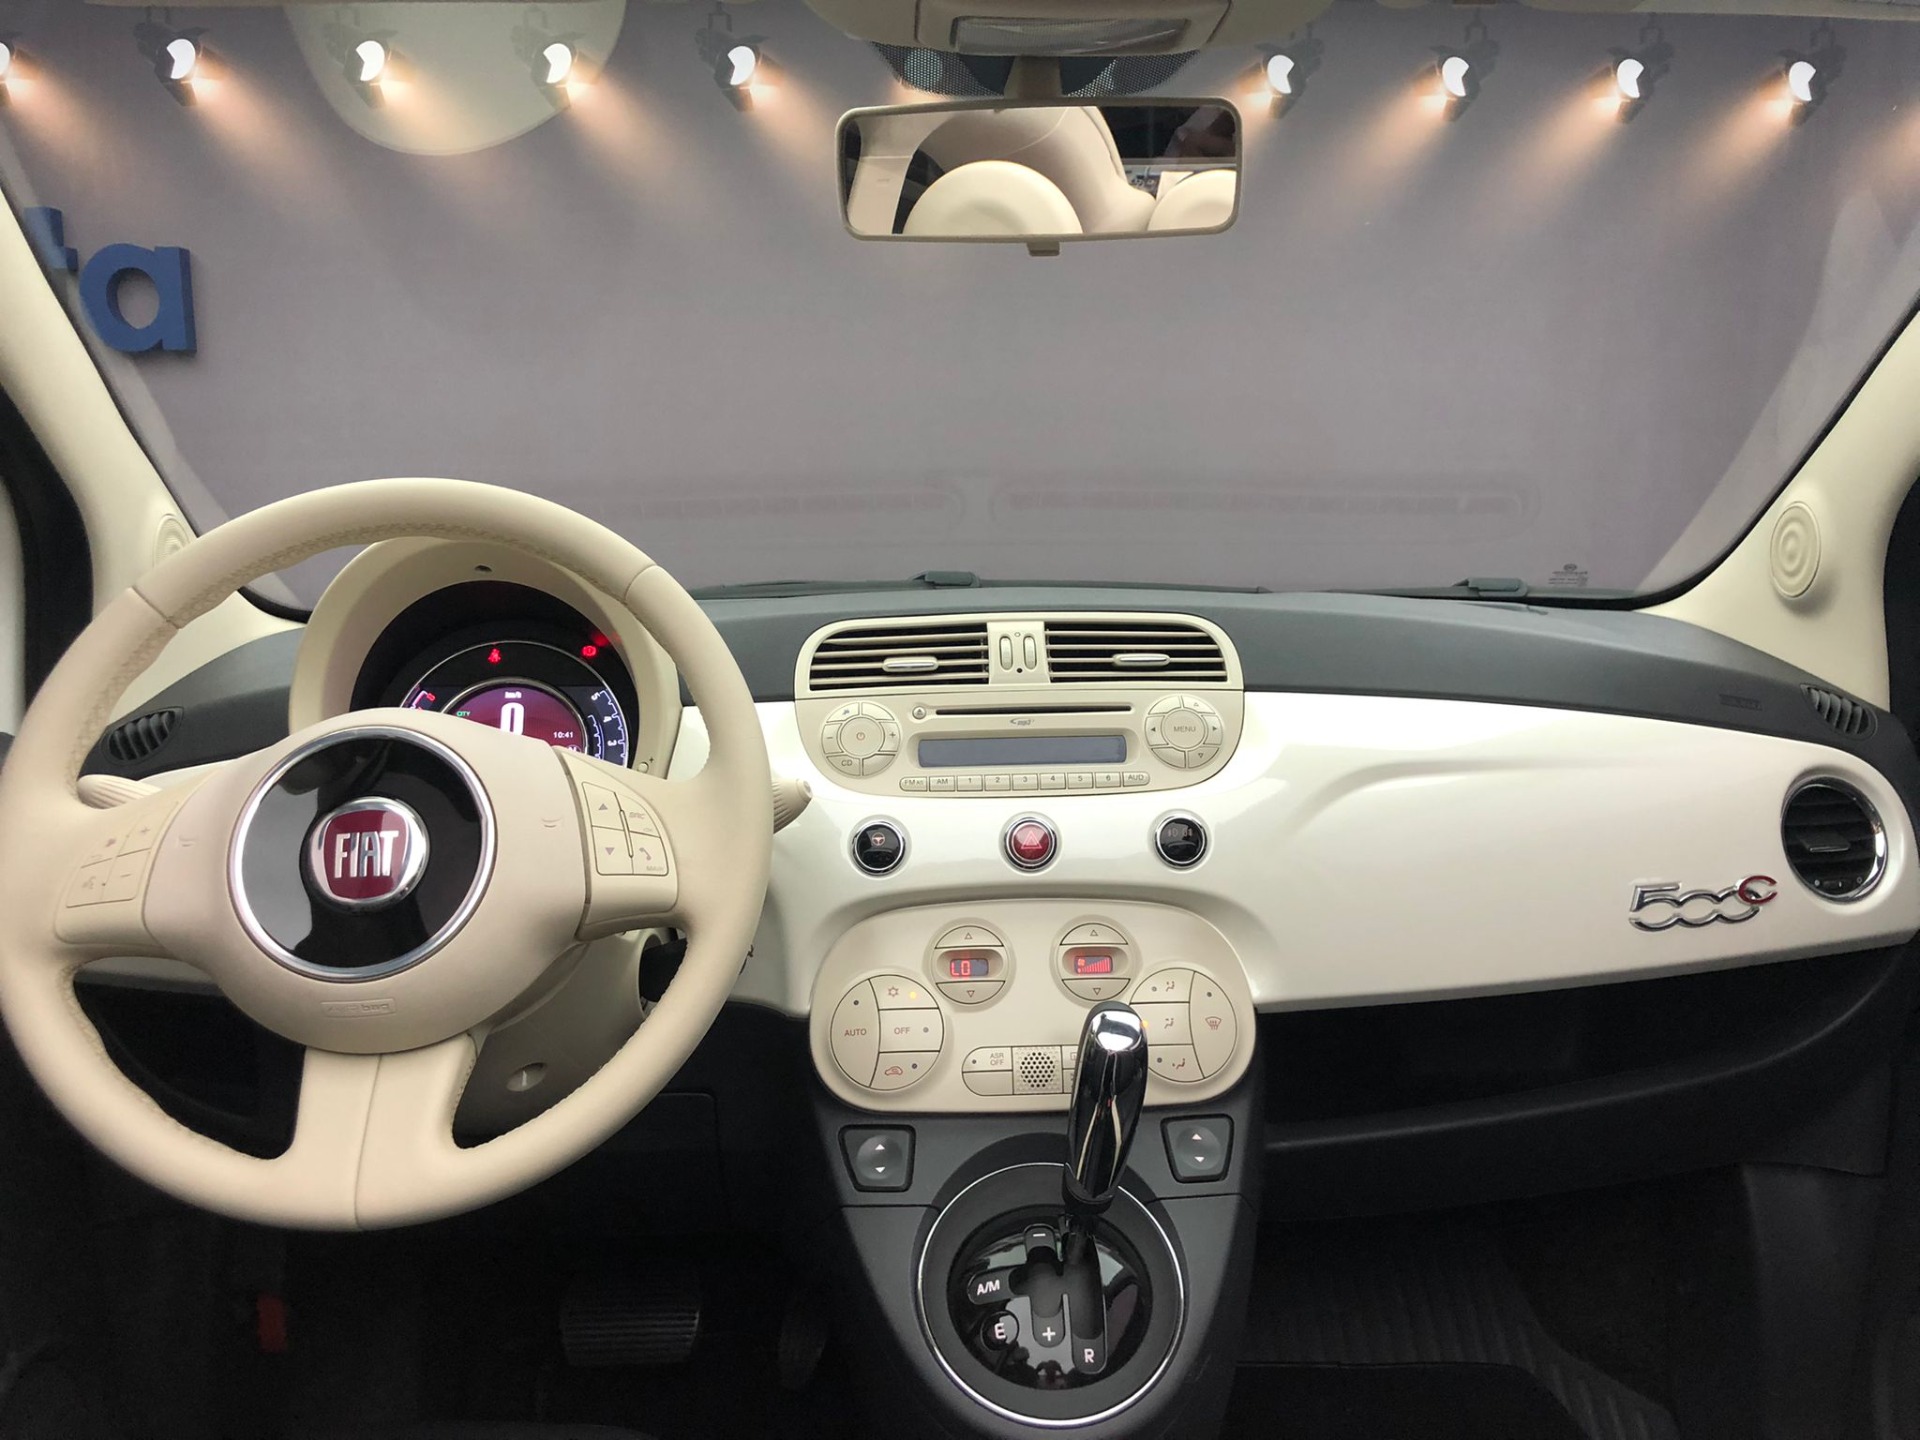 2015 51Bin Km'de Otomatik Cabrio Fıat 500 Cult-14